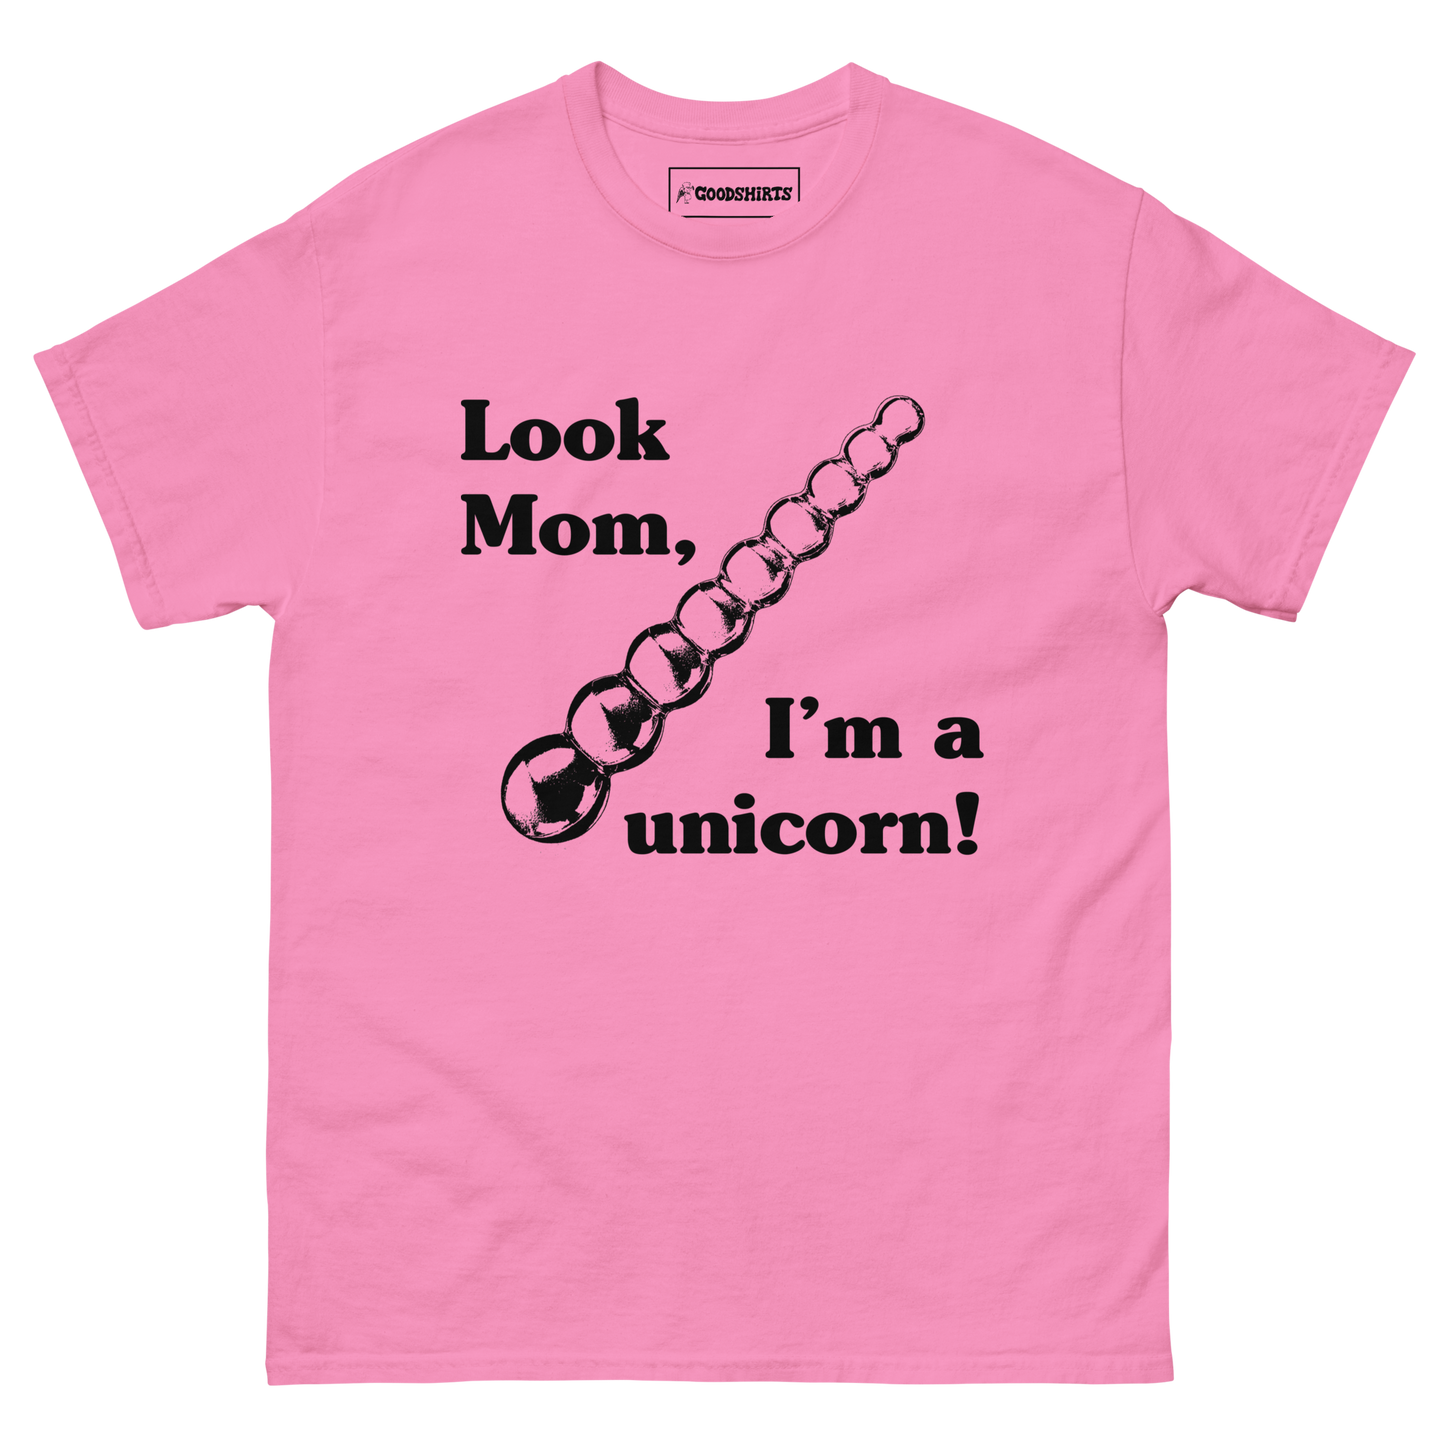 Look Mom, I'm A Unicorn.